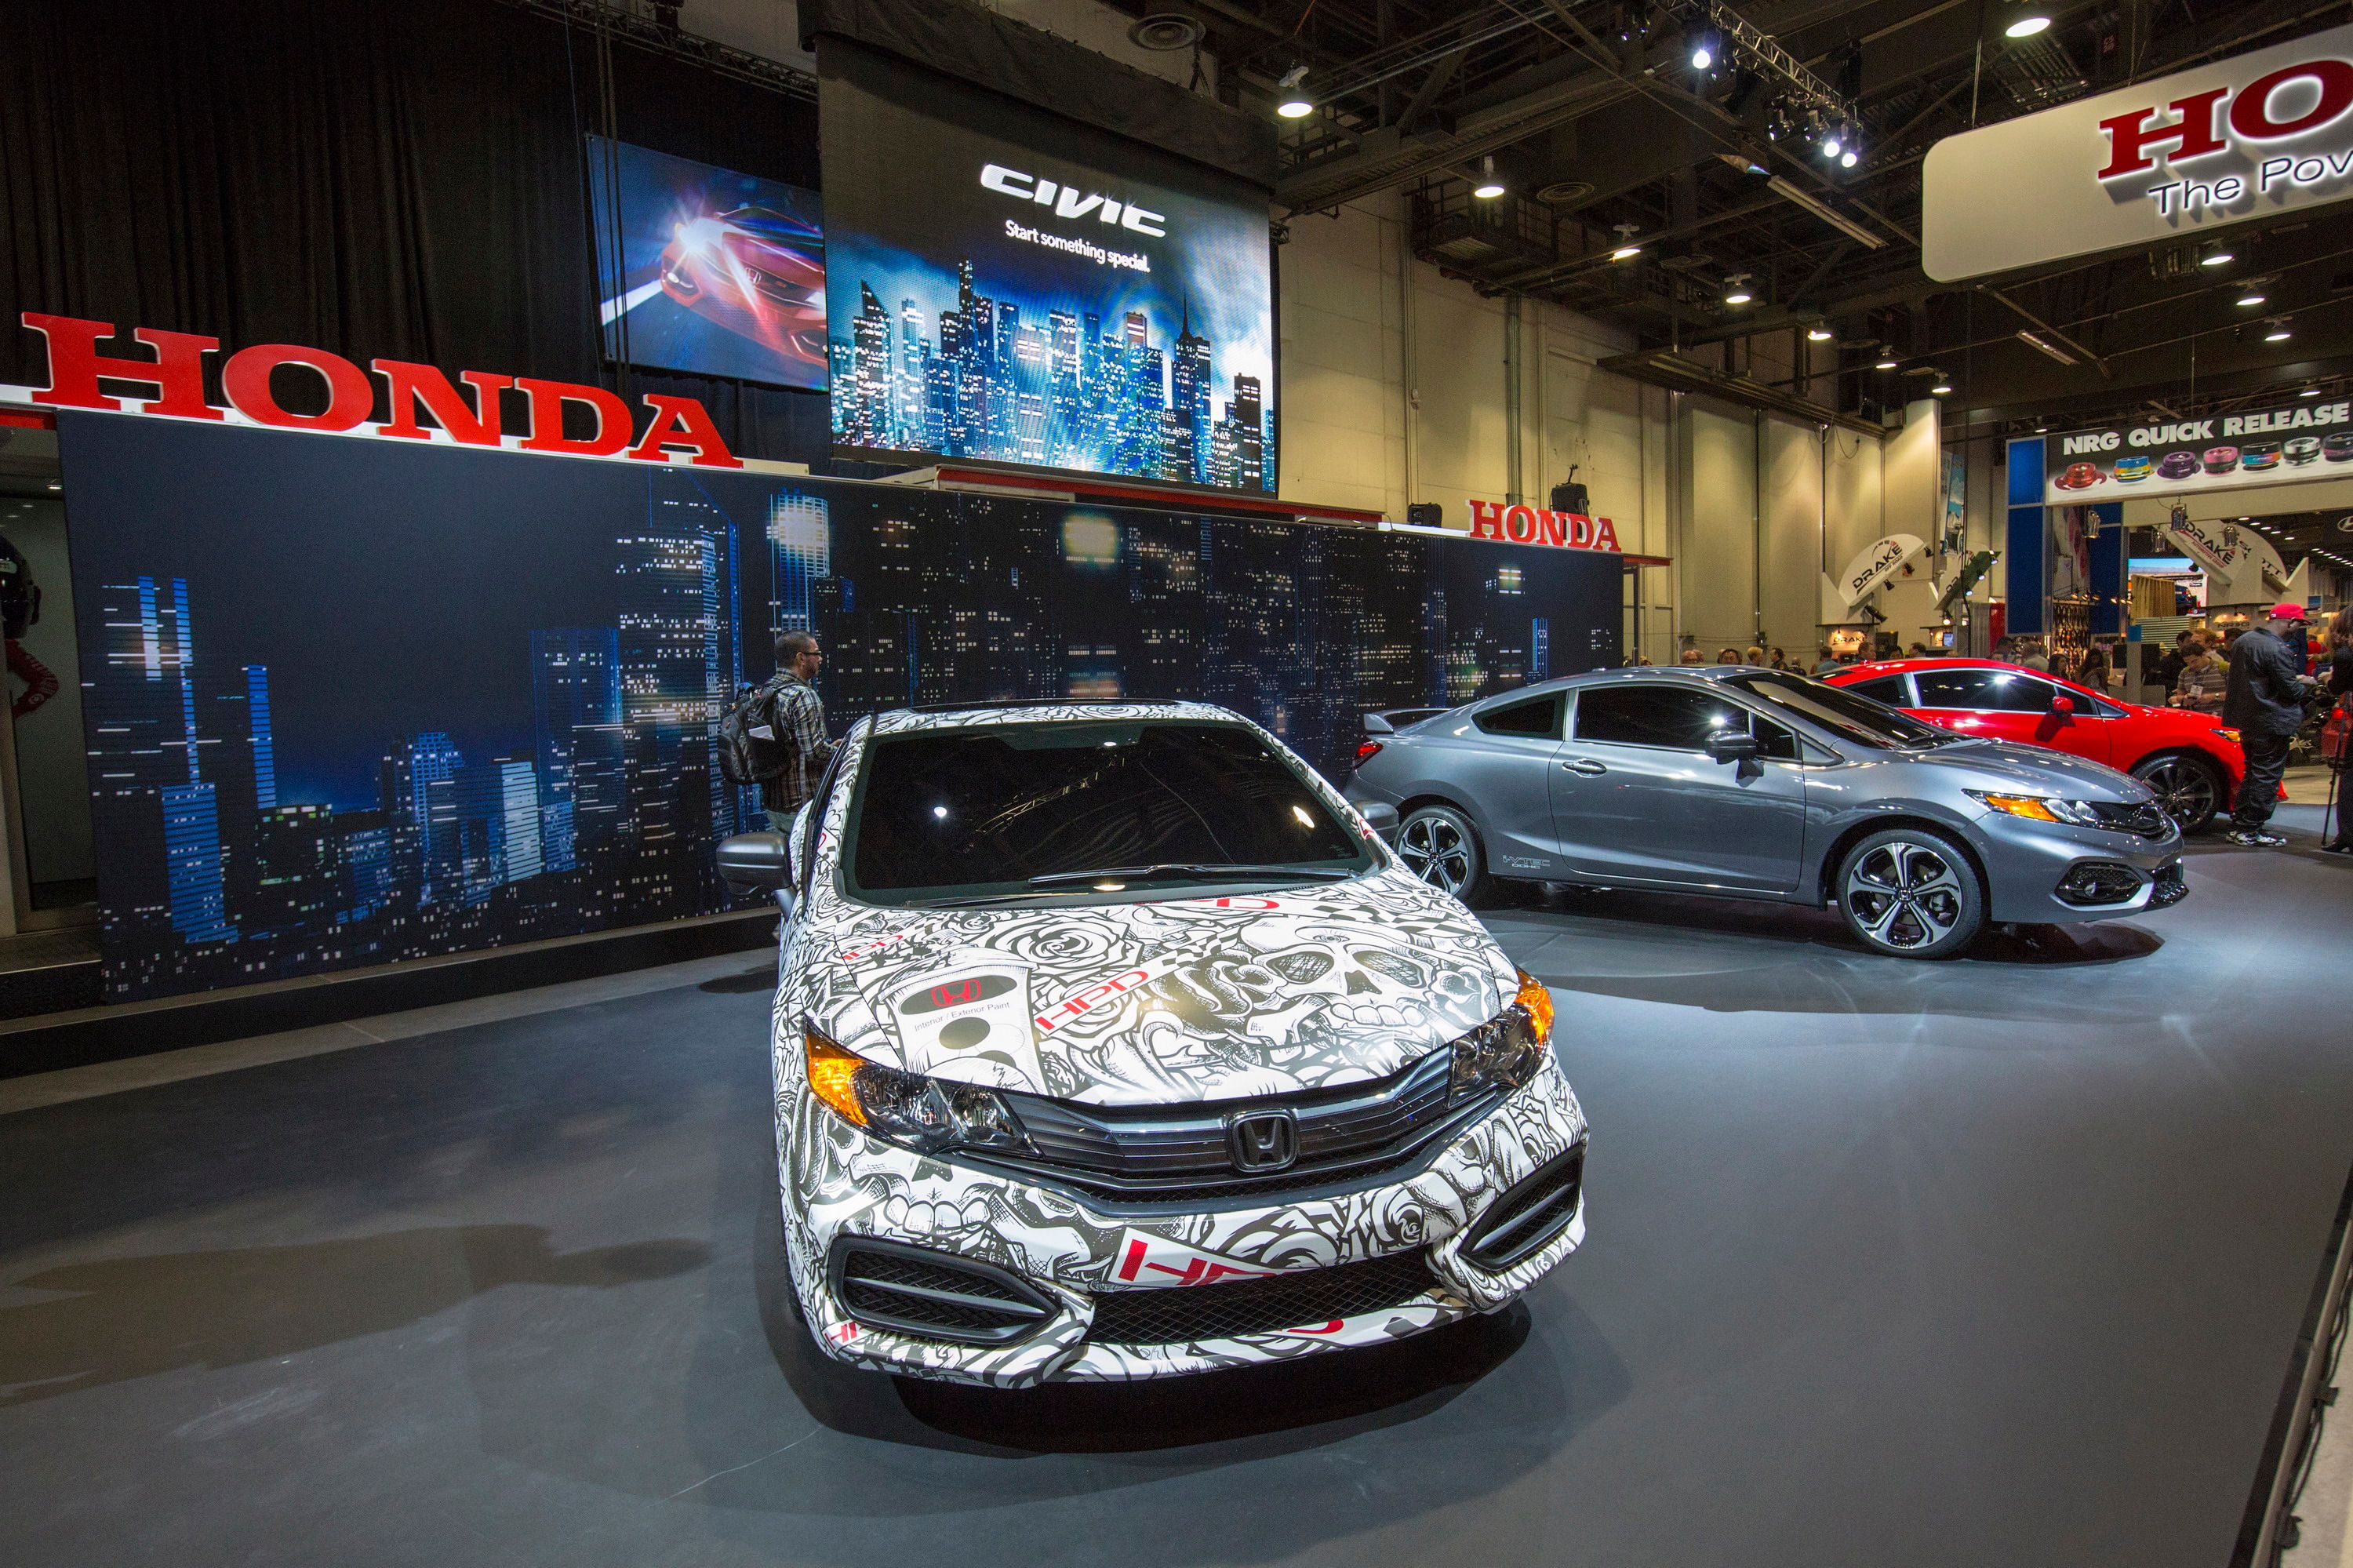 2014 Honda HPD Civic Street Performance Concept